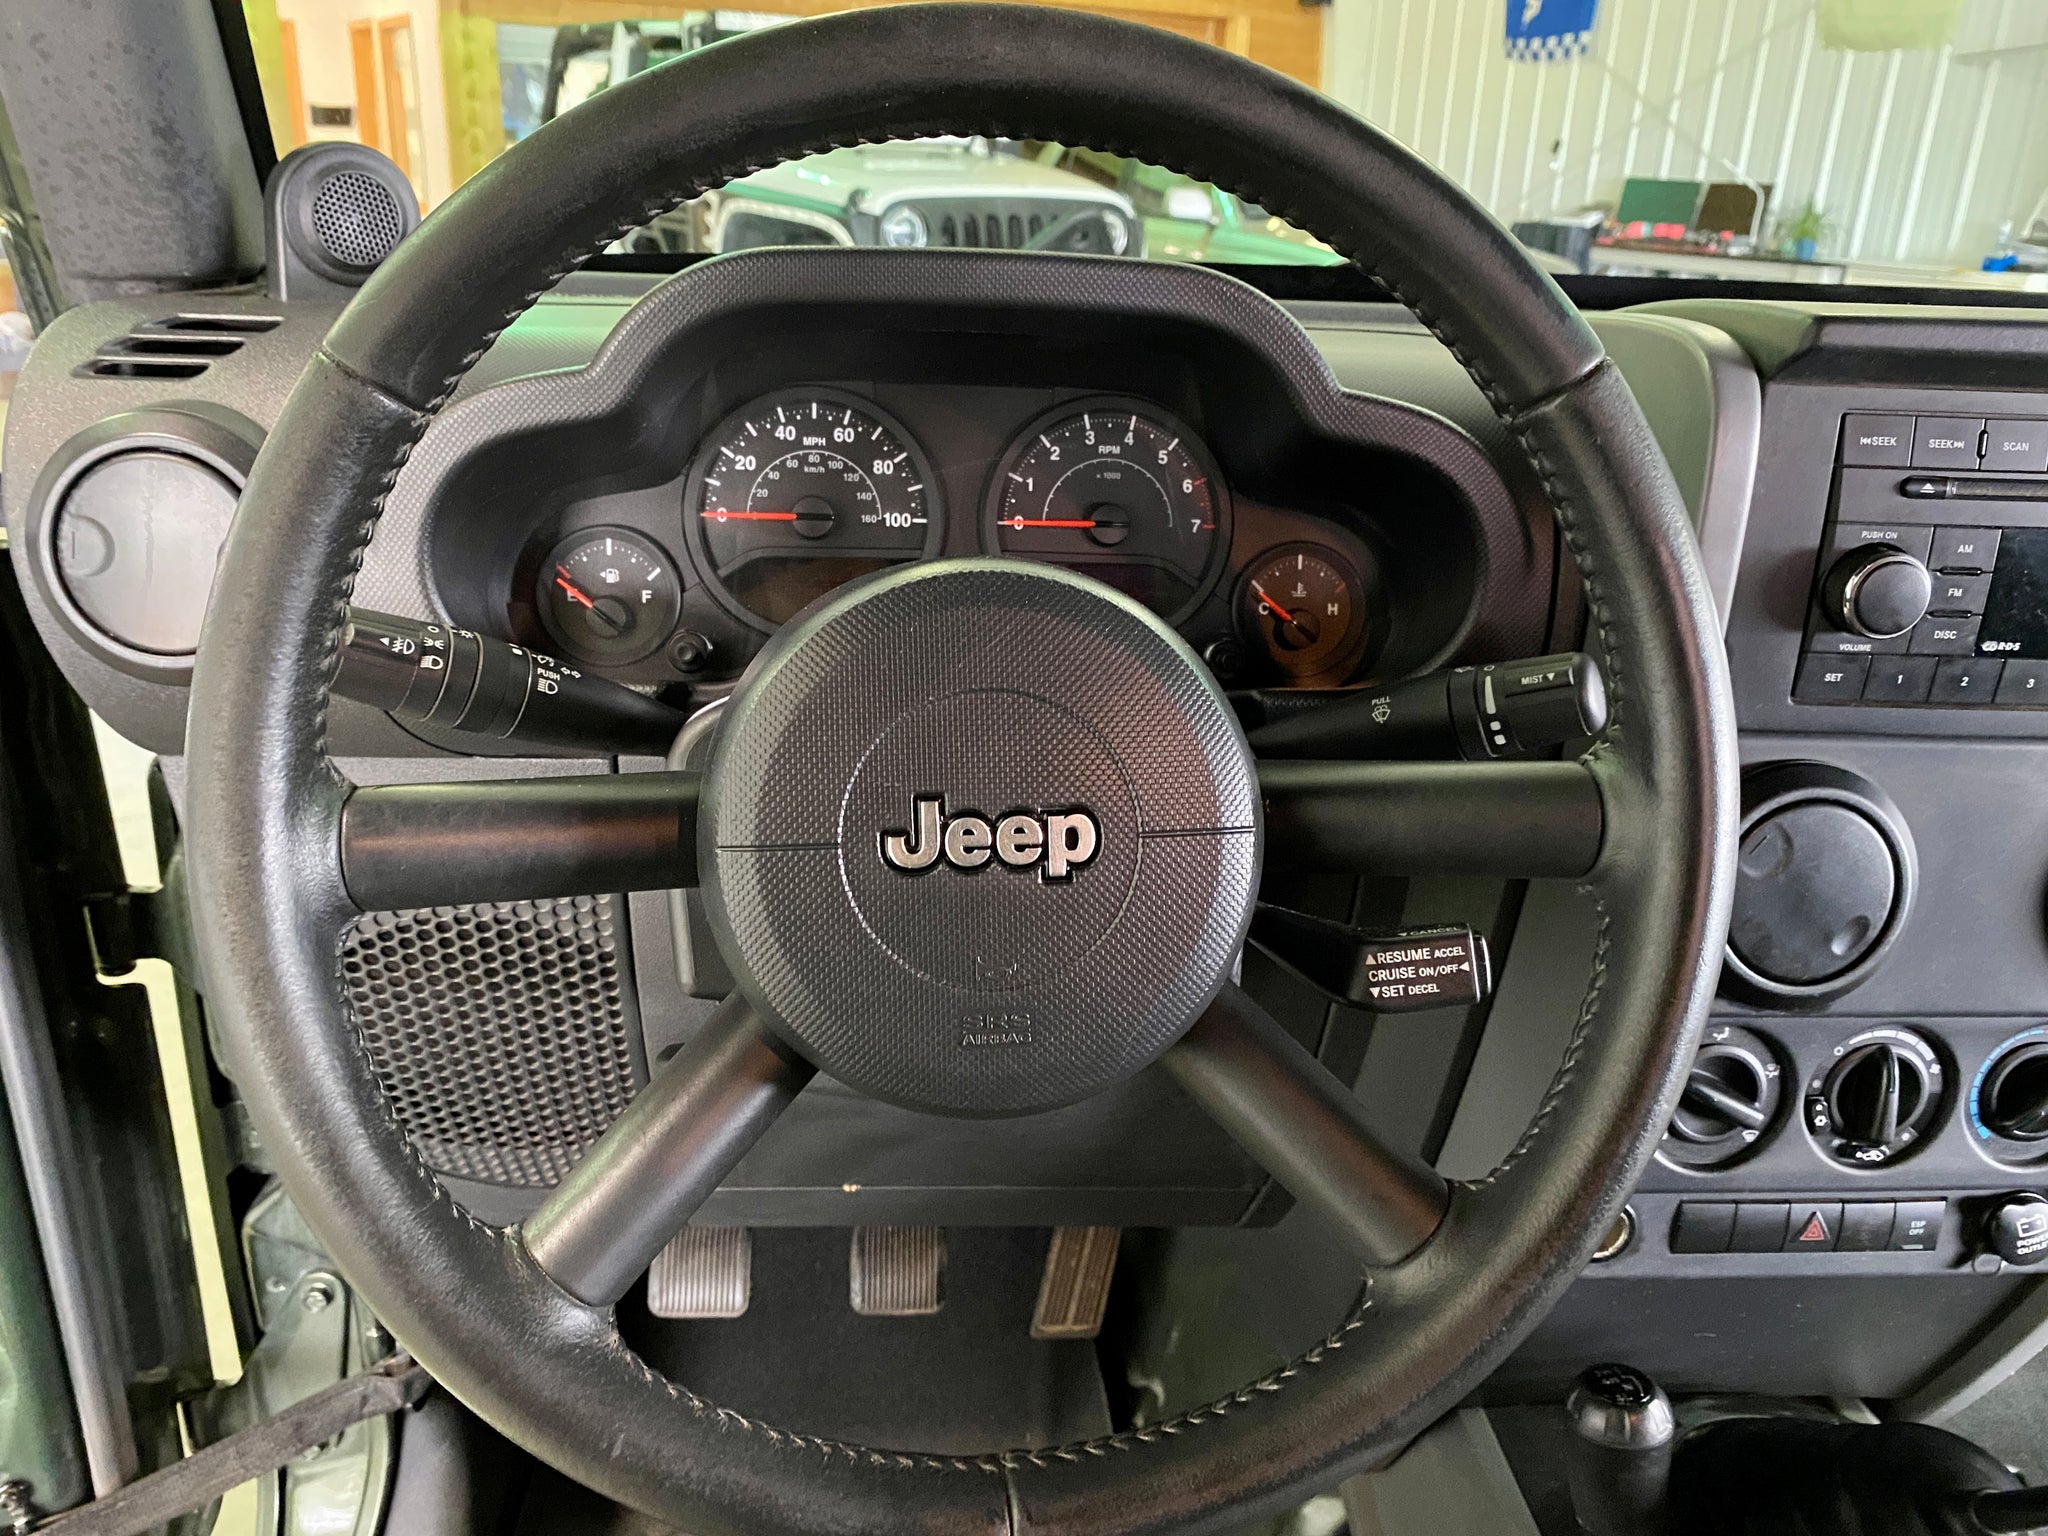 2007 Jeep Wrangler X 4WD Manual - ShiftedMN